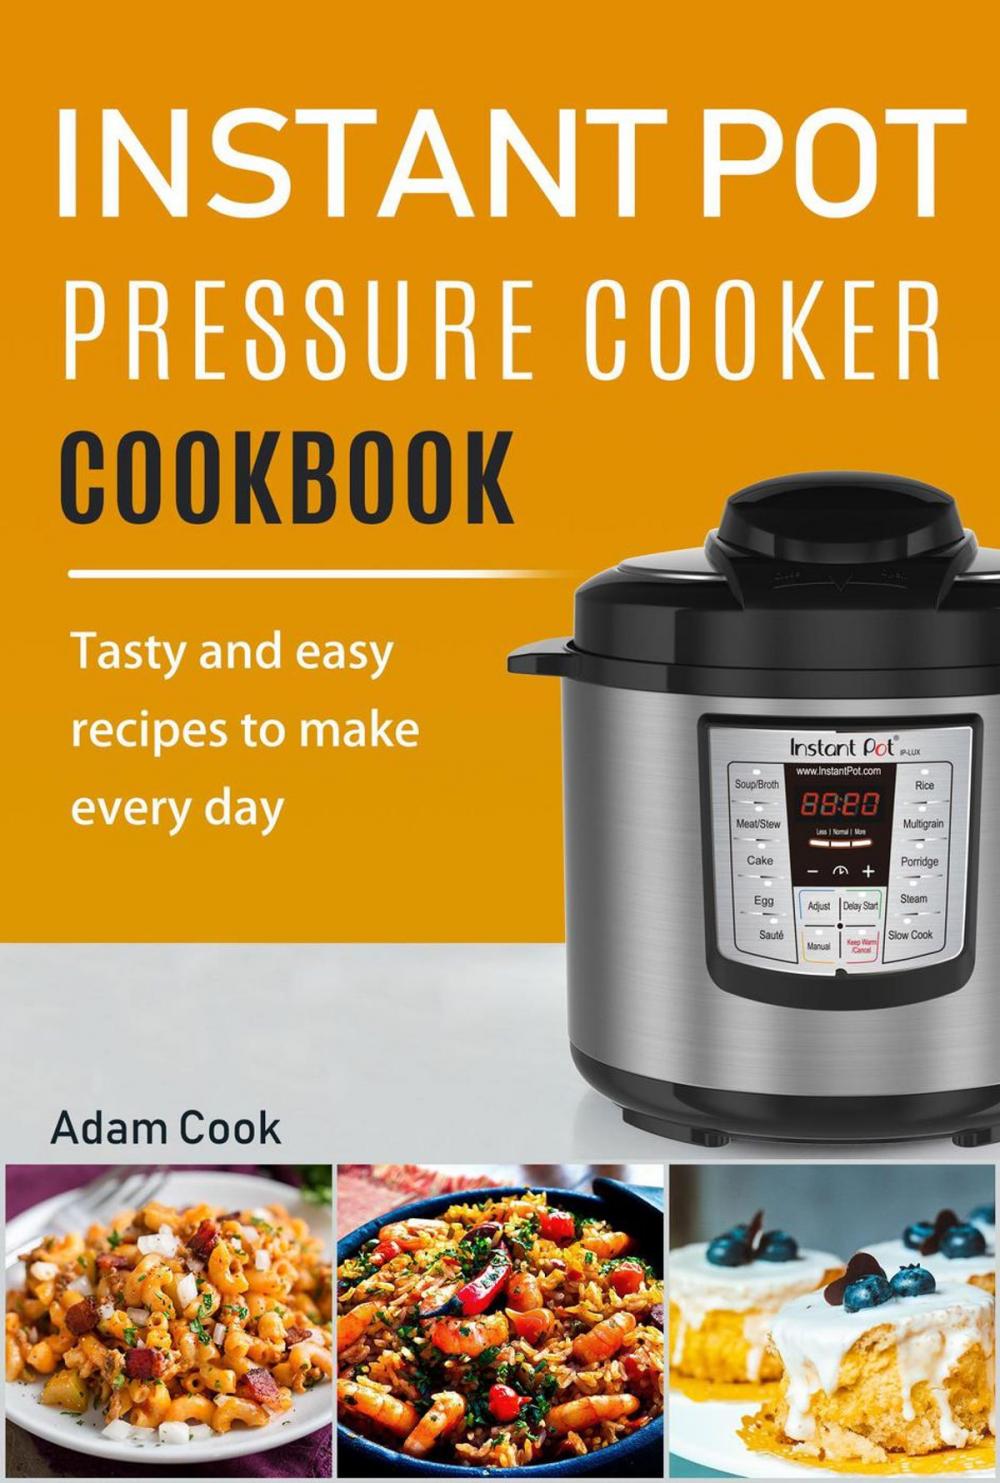 Big bigCover of Instant Pot Cookbook